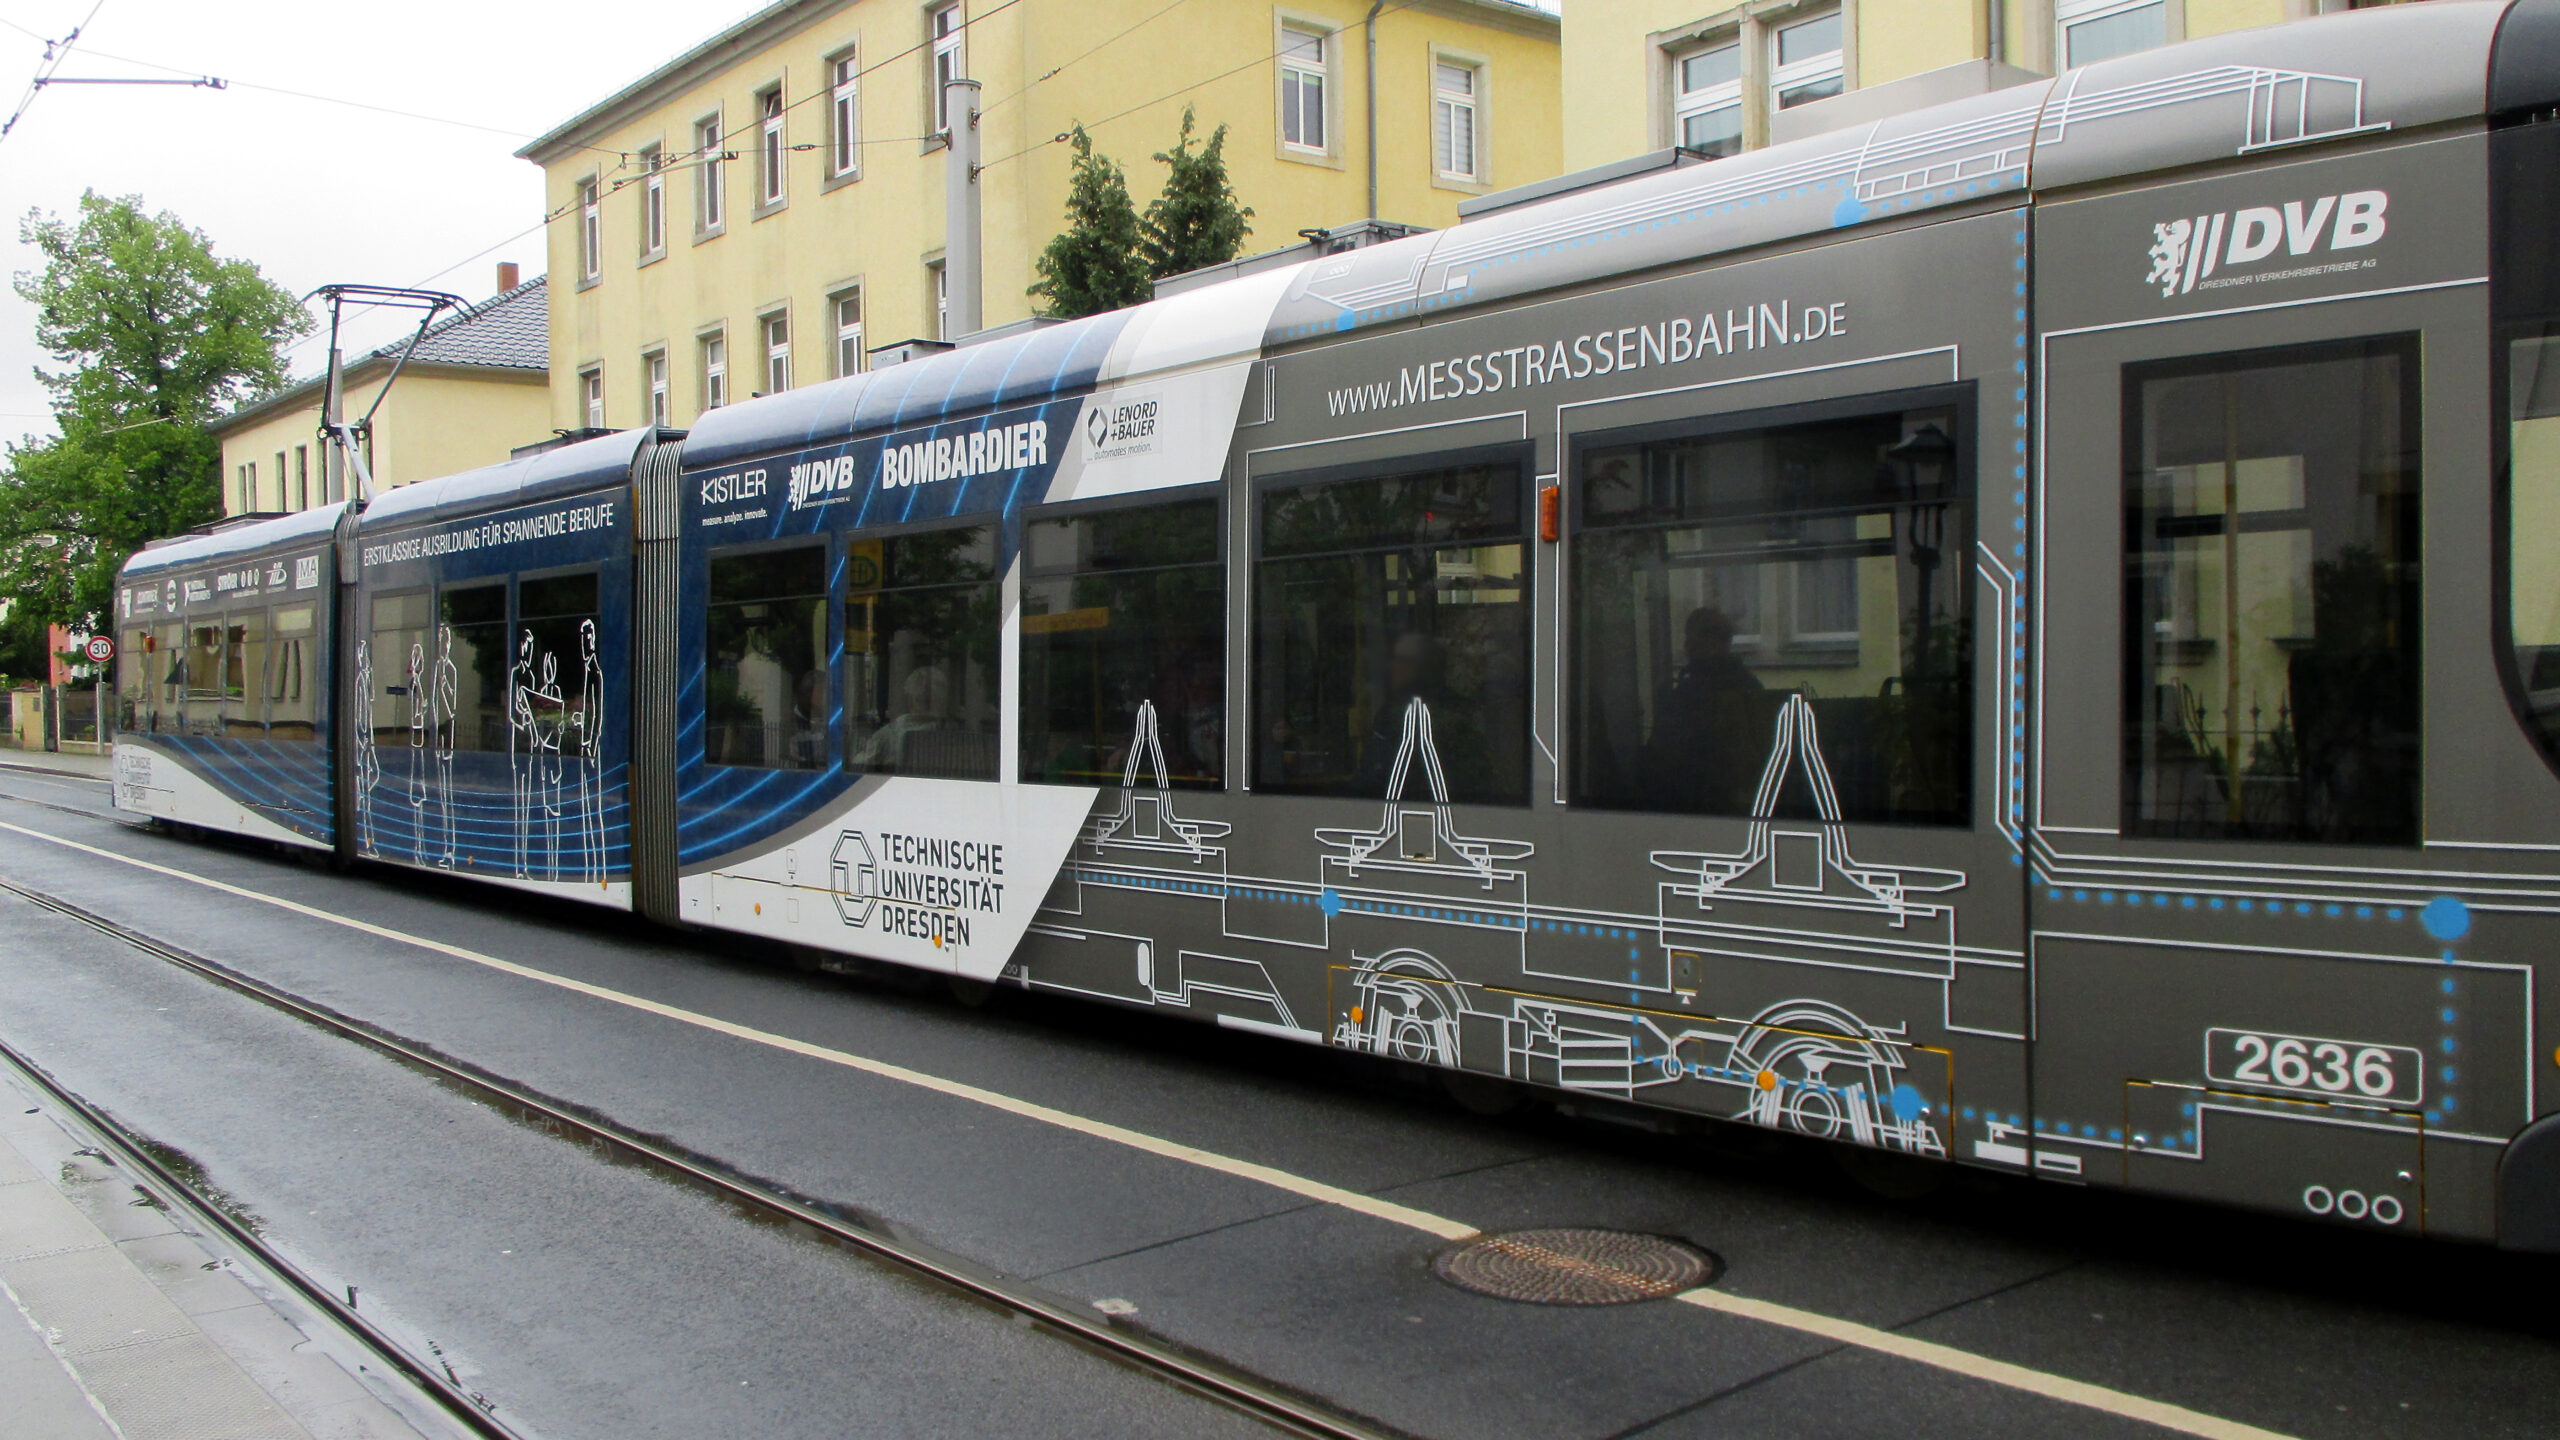 Dresden tram in TU Dresden livery